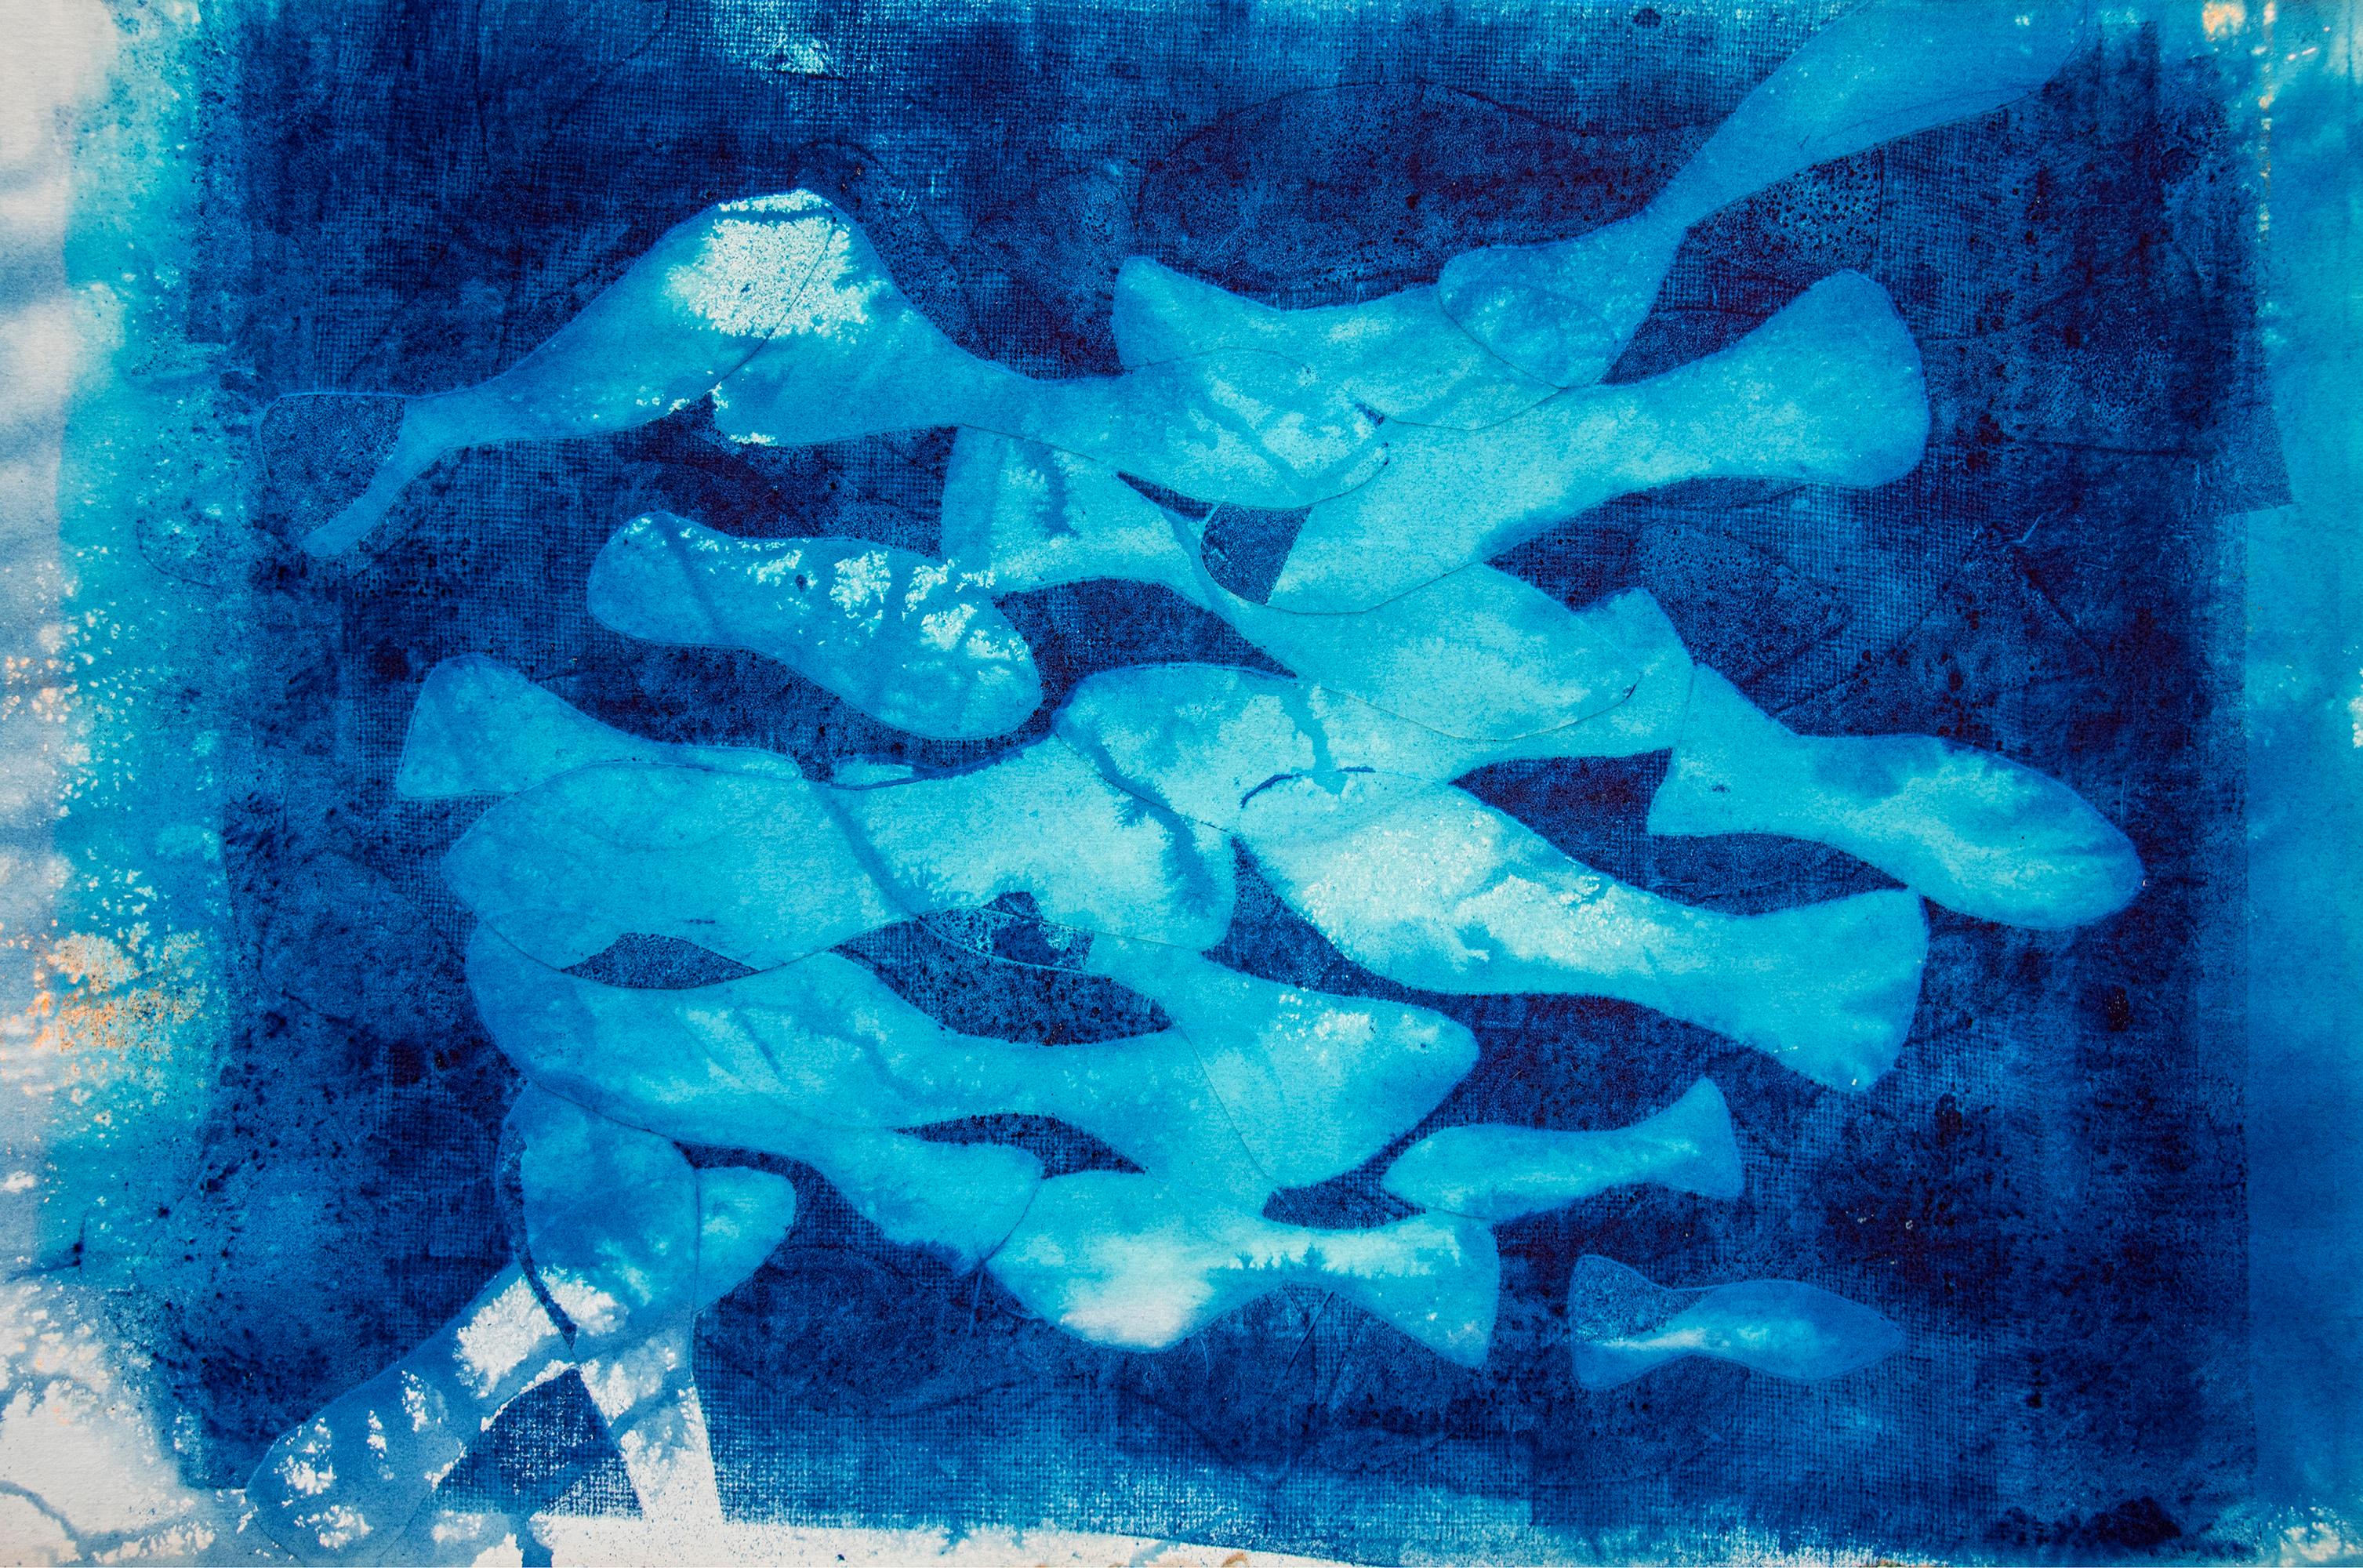 Enric Servera Animal Painting - Marina Abismal, Mixed Media Painting, Blue Tones, Mediterranean Fish Patterns